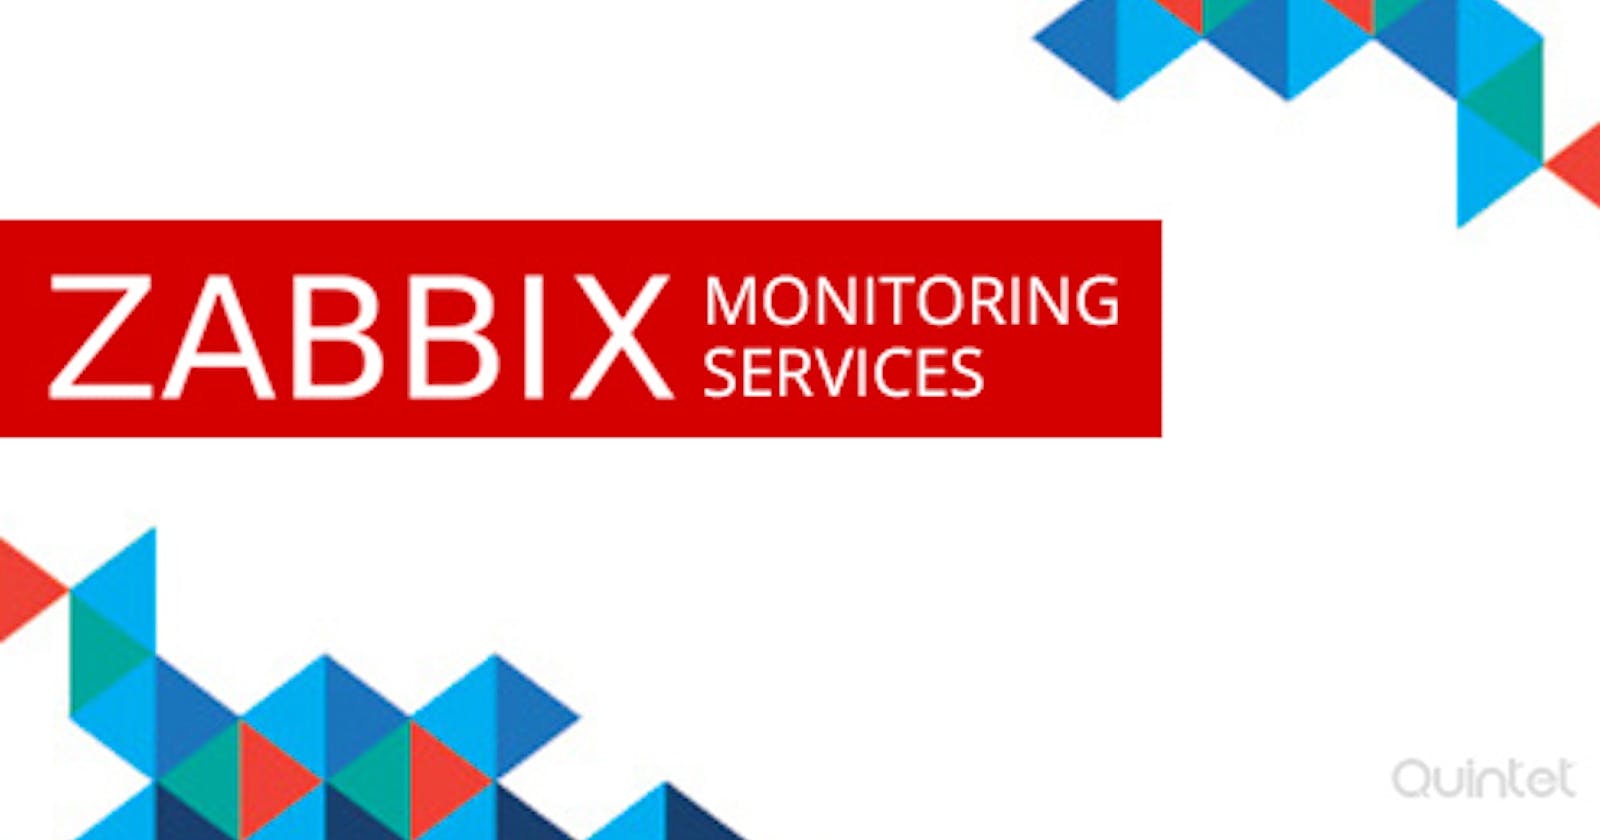 Zabbix Monitoring Solutions For Enterprise